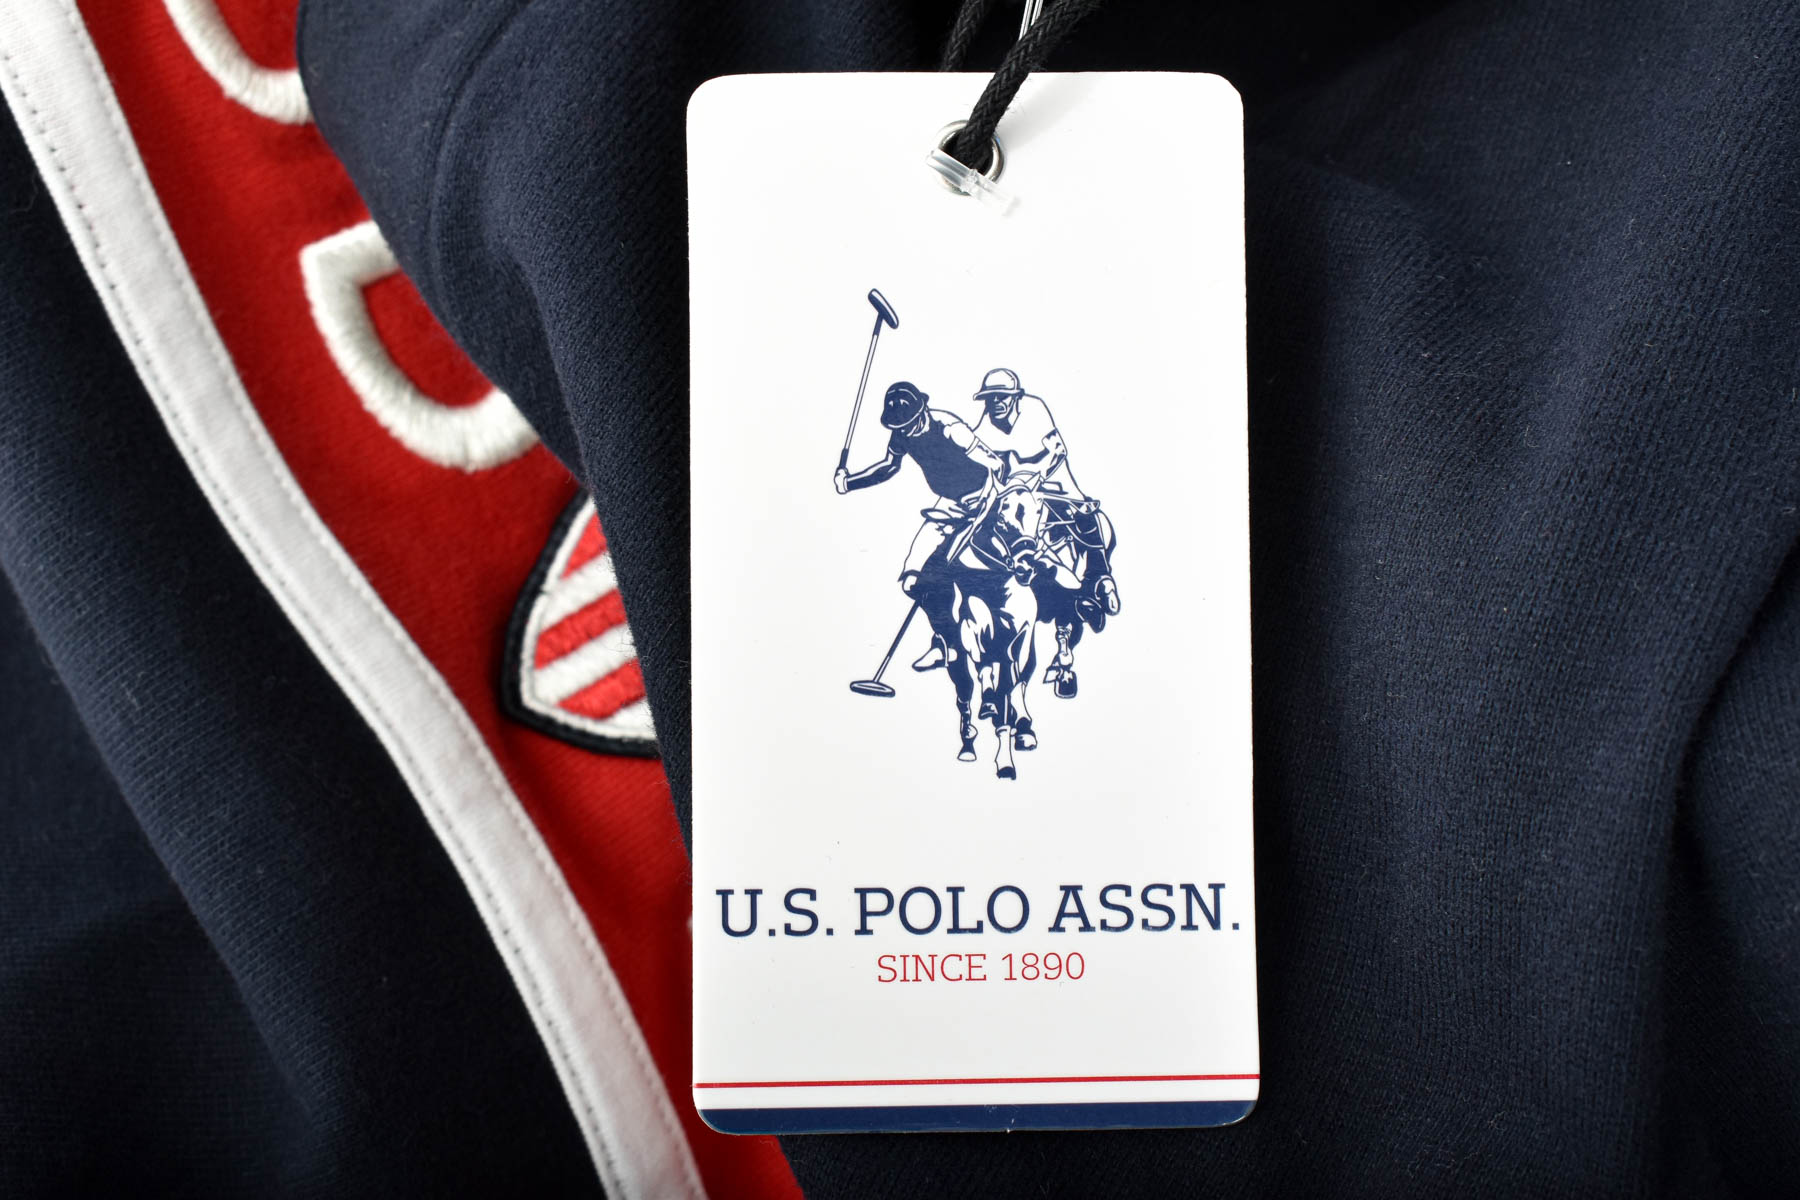 Boys' blouse - U.S. Polo ASSN. - 2